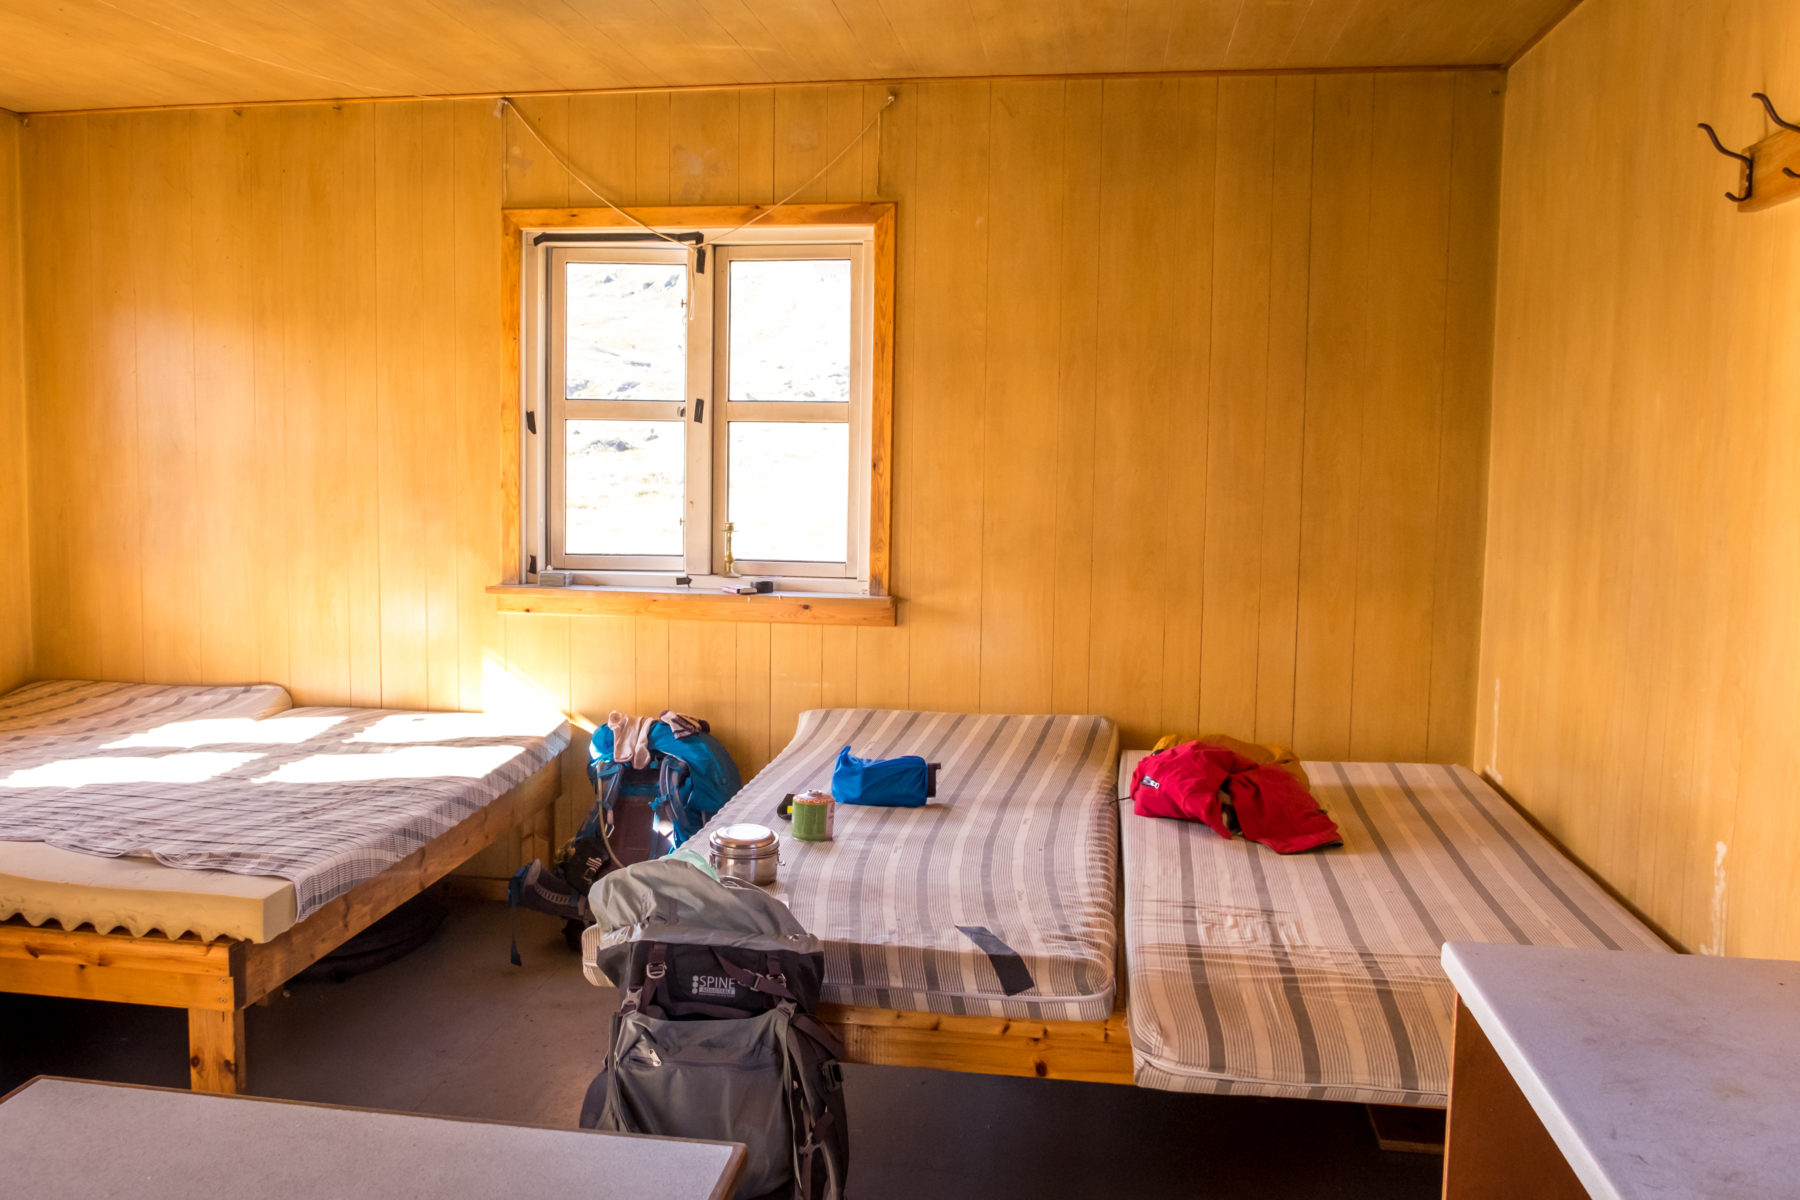 Inside sleeping area Eqalugaarniarfik hut on the Arctic Circle Trail